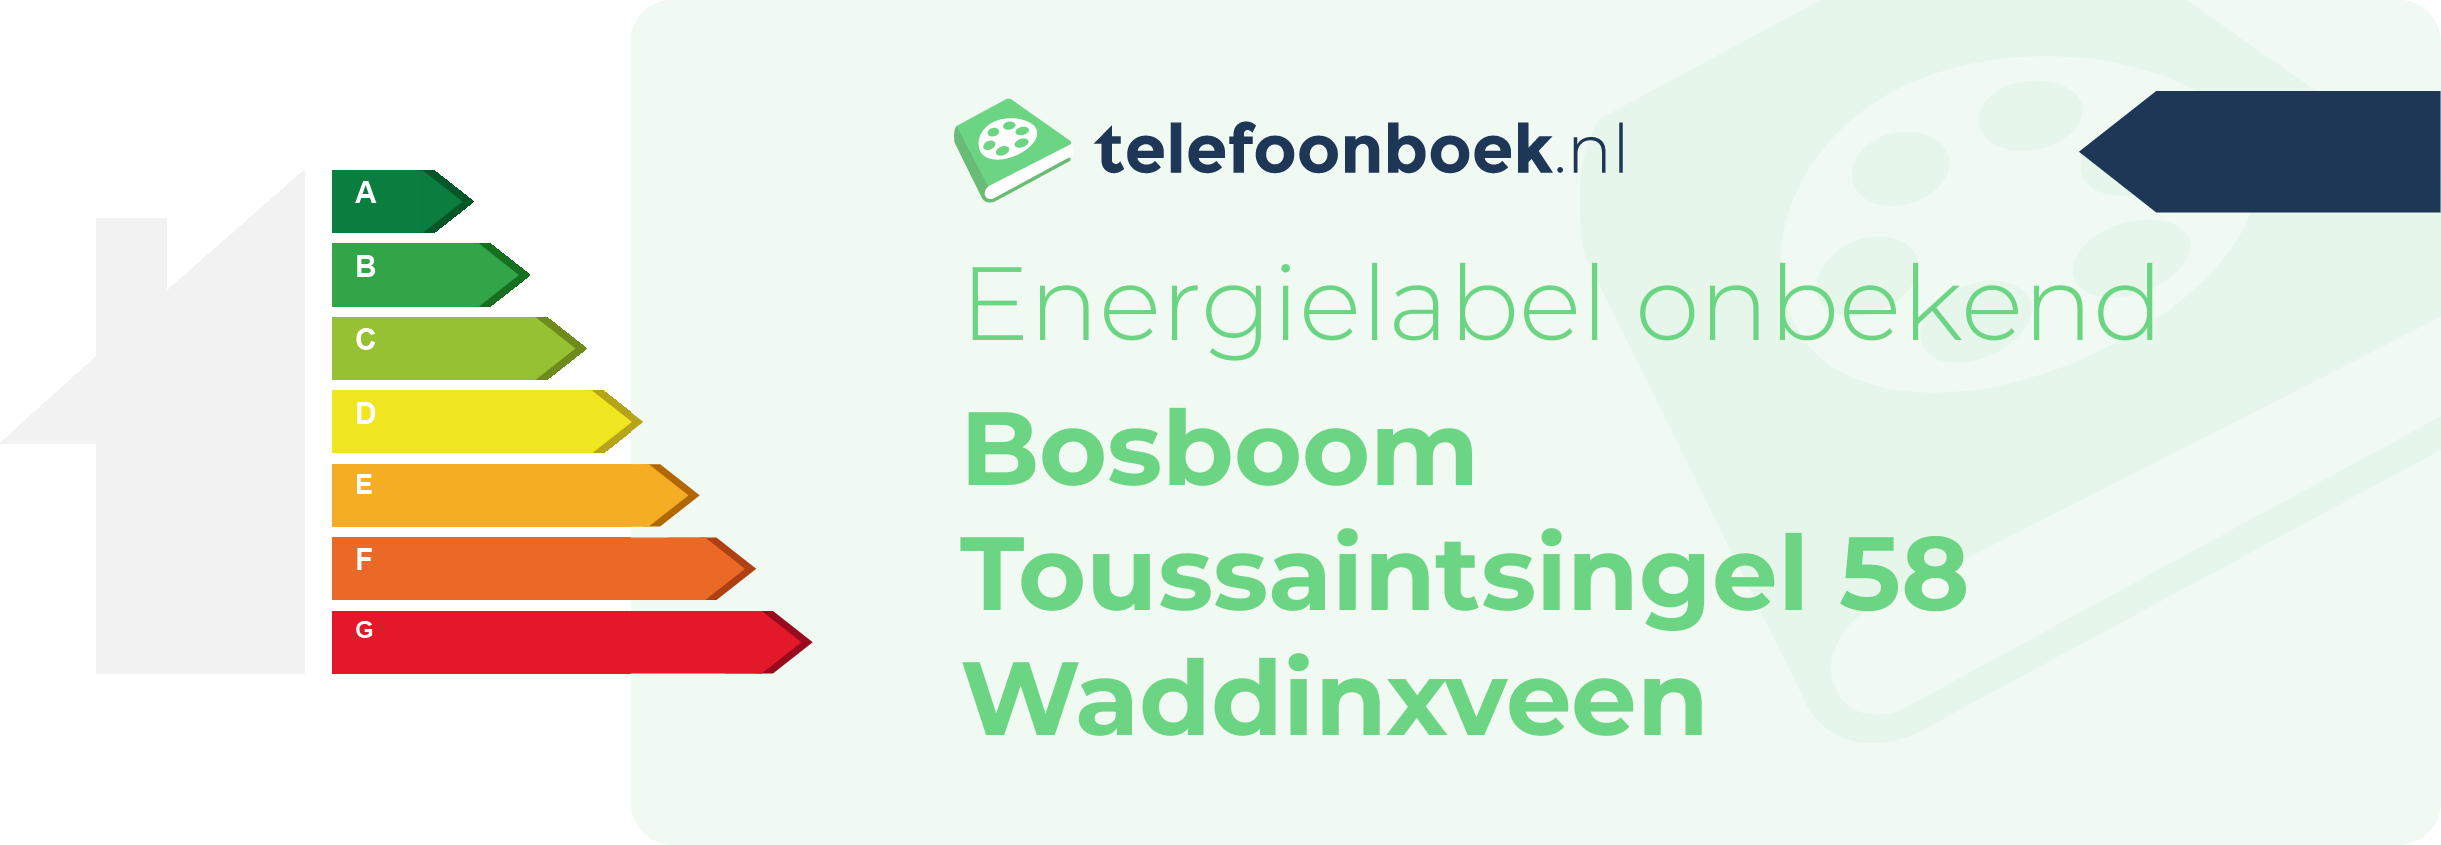 Energielabel Bosboom Toussaintsingel 58 Waddinxveen